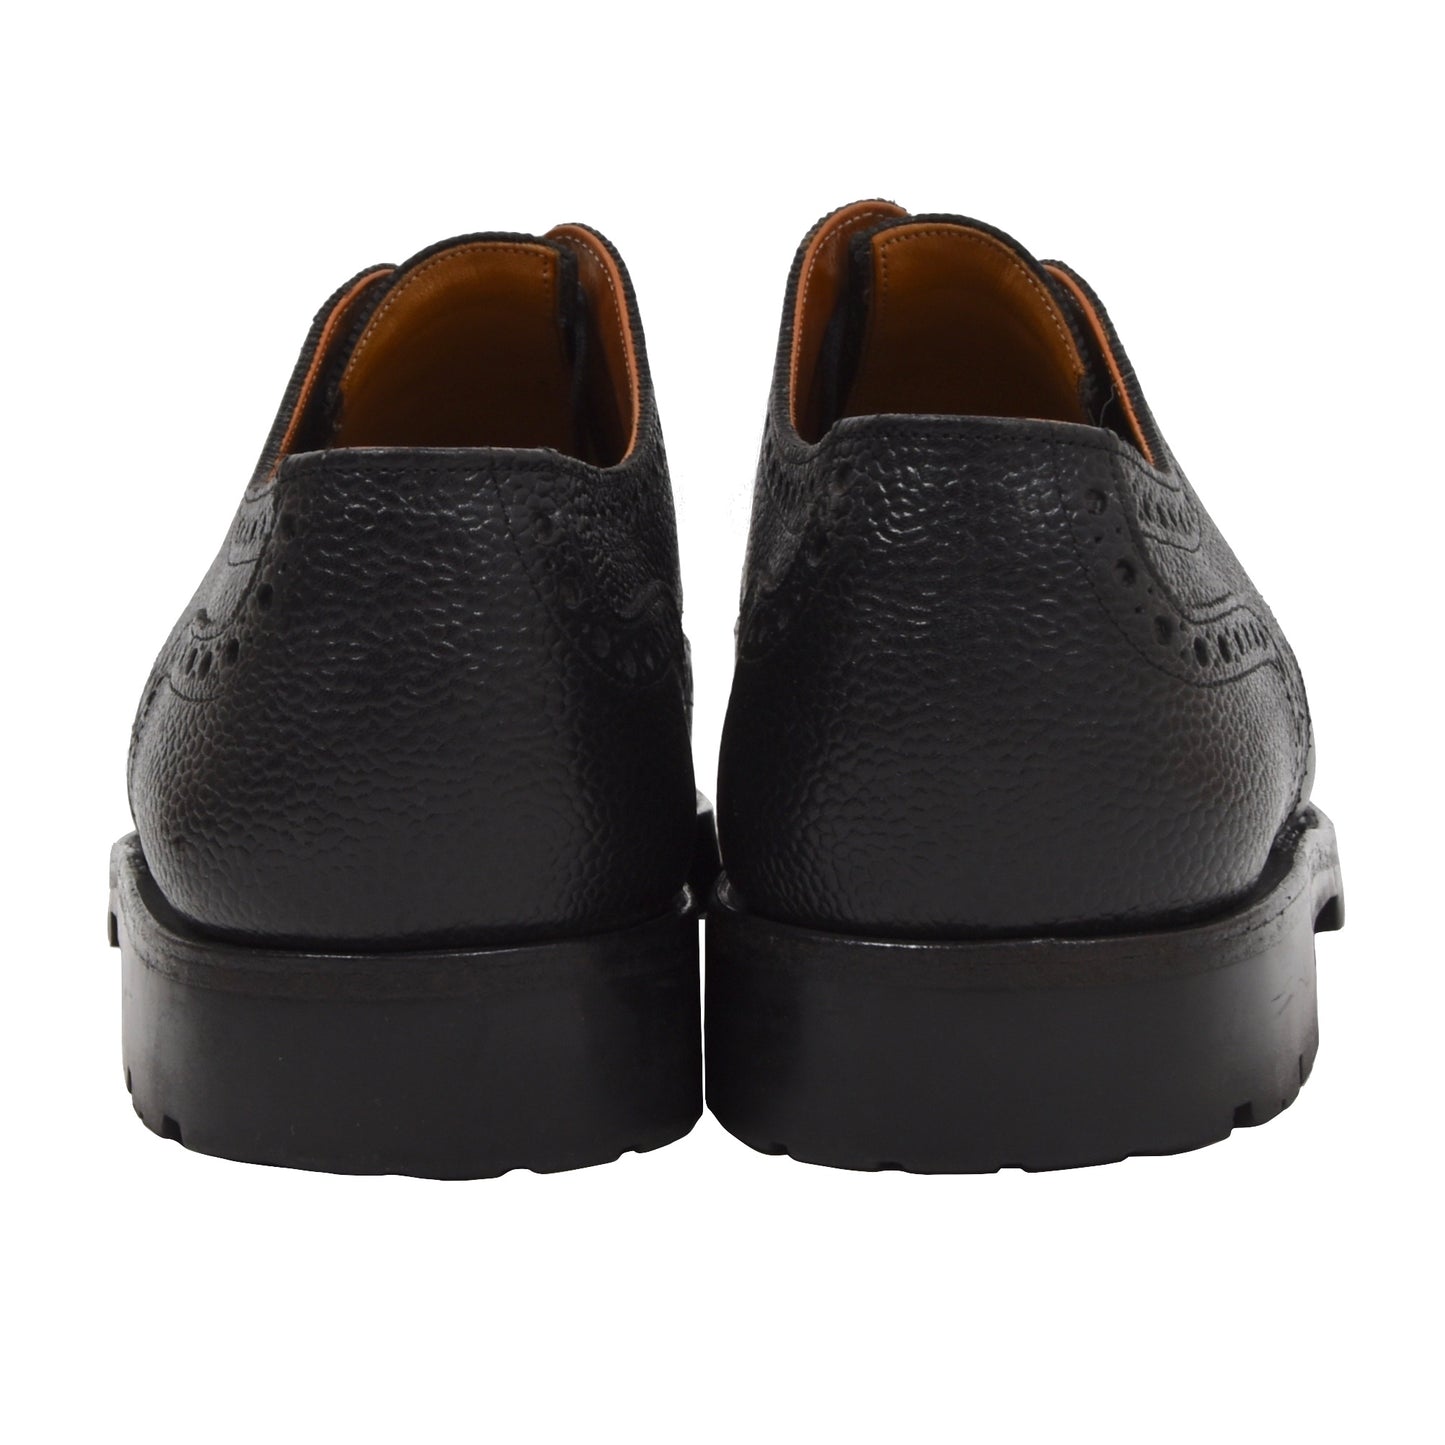 Ludwig Reiter Scotch Grain Shoes Size 9 - Black